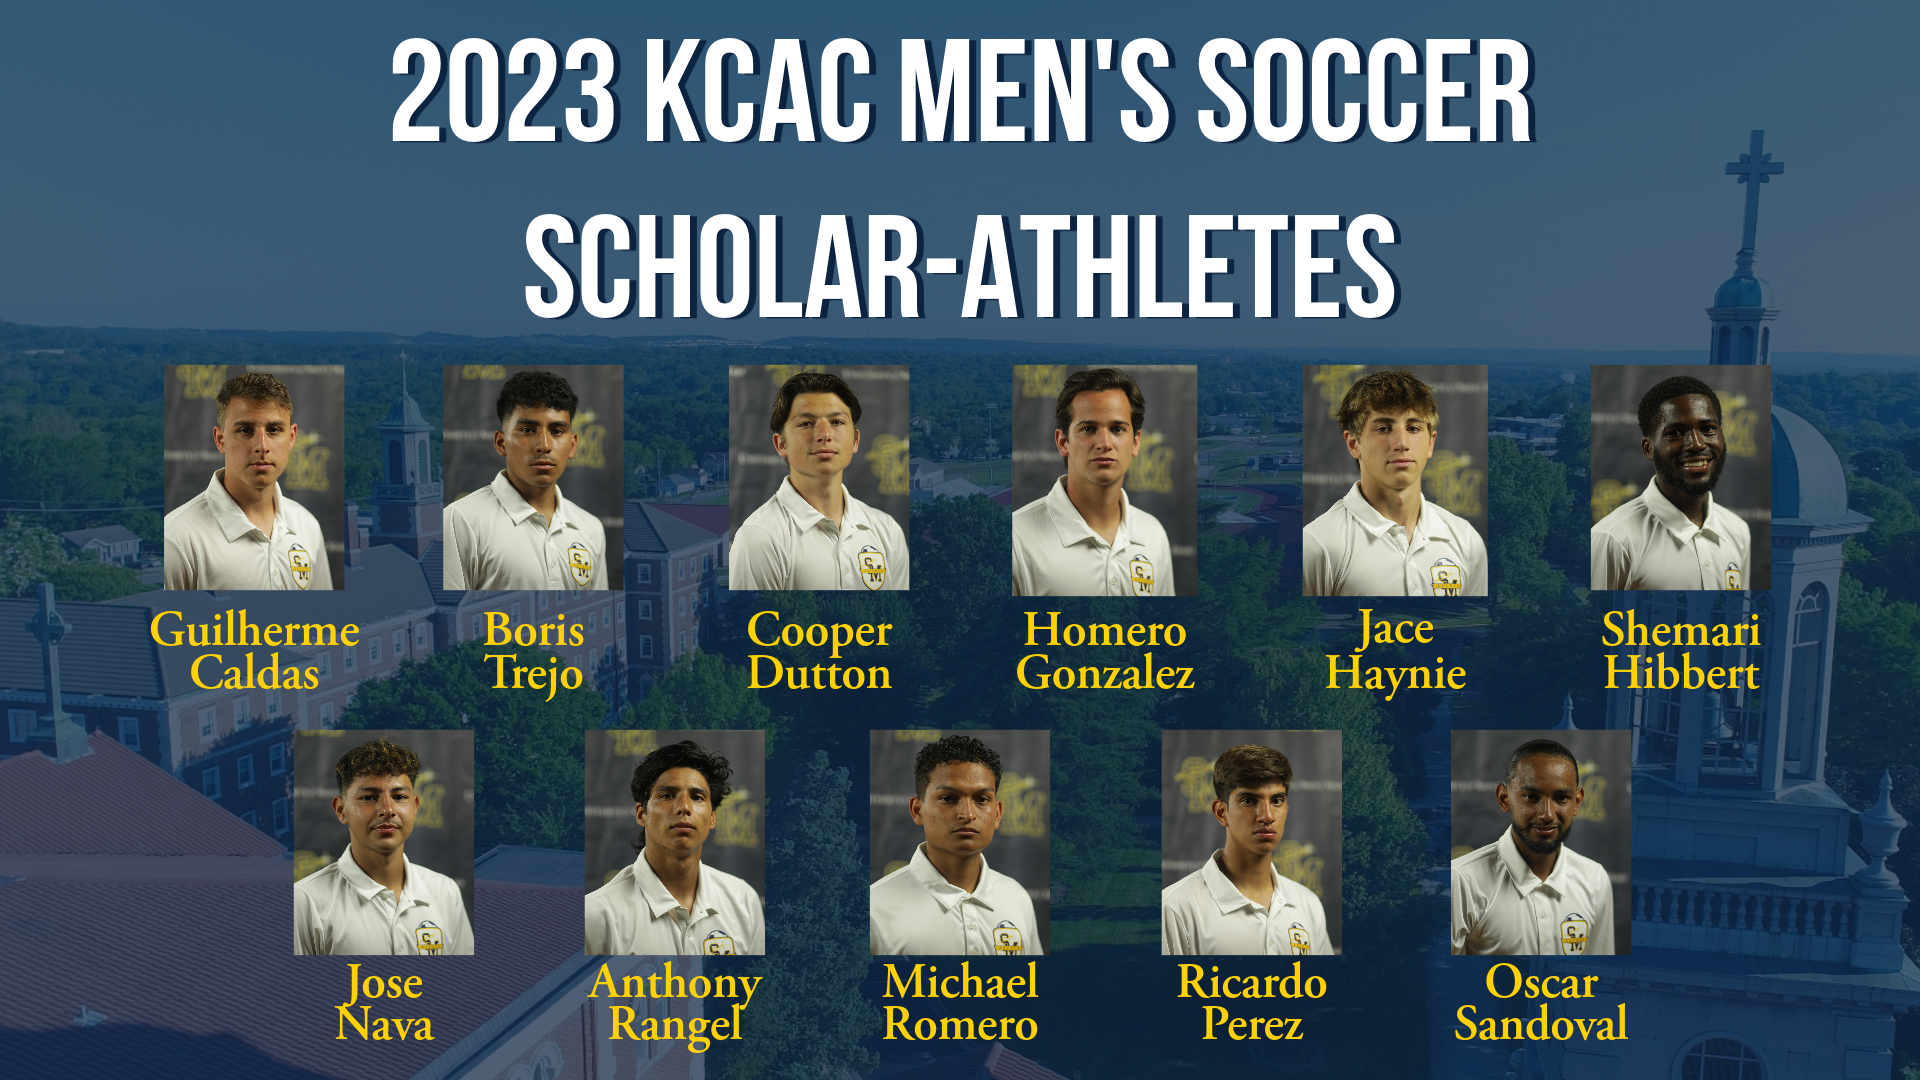 11 Men's Soccer Players Named 2023 KCAC Scholar-Athletes